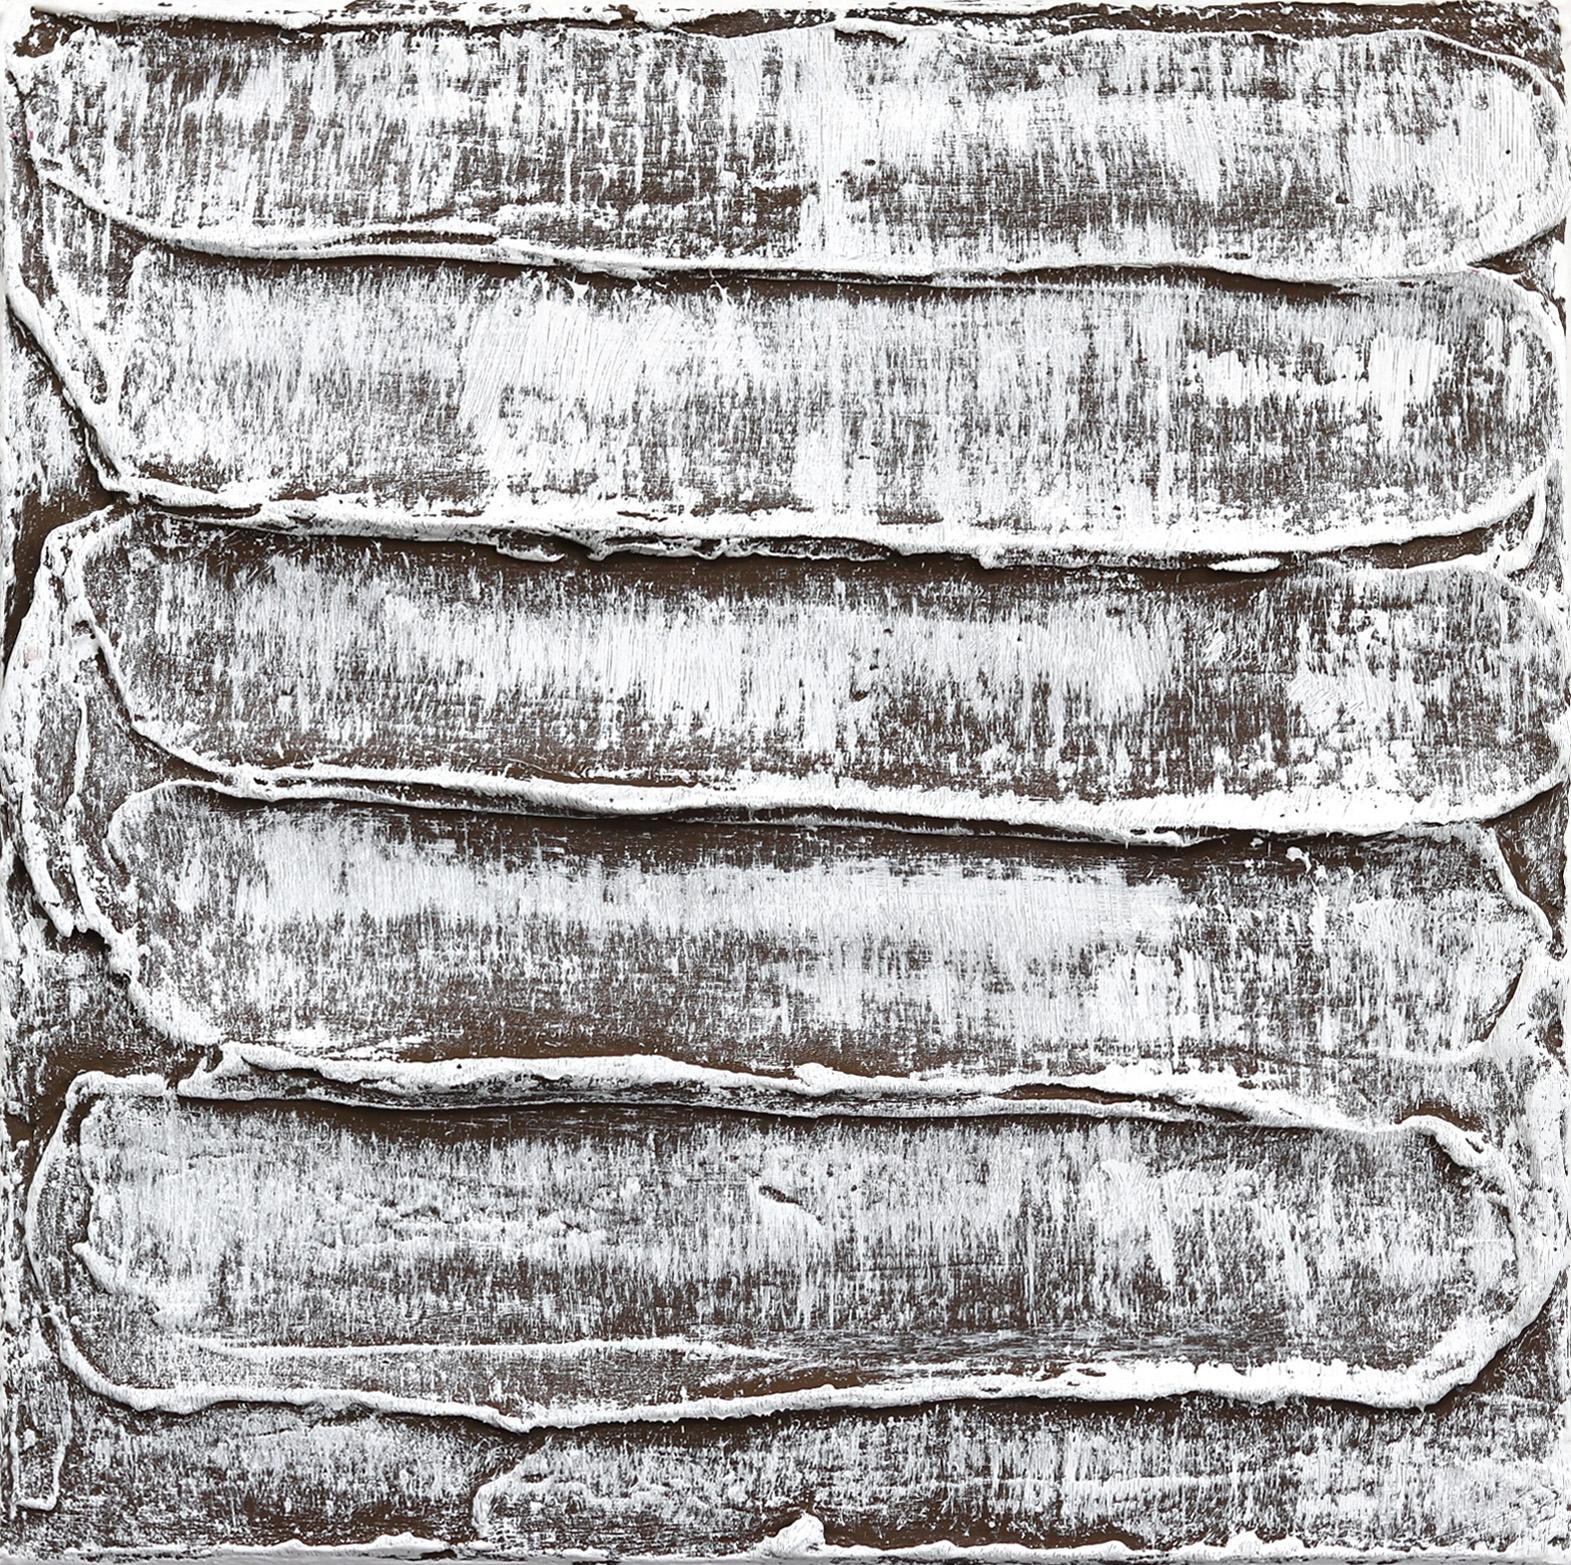 Deep Textures 007 - Textural Abstract Minimalist Impasto Thick Paint on Canvas - Mixed Media Art by Len Klikunas